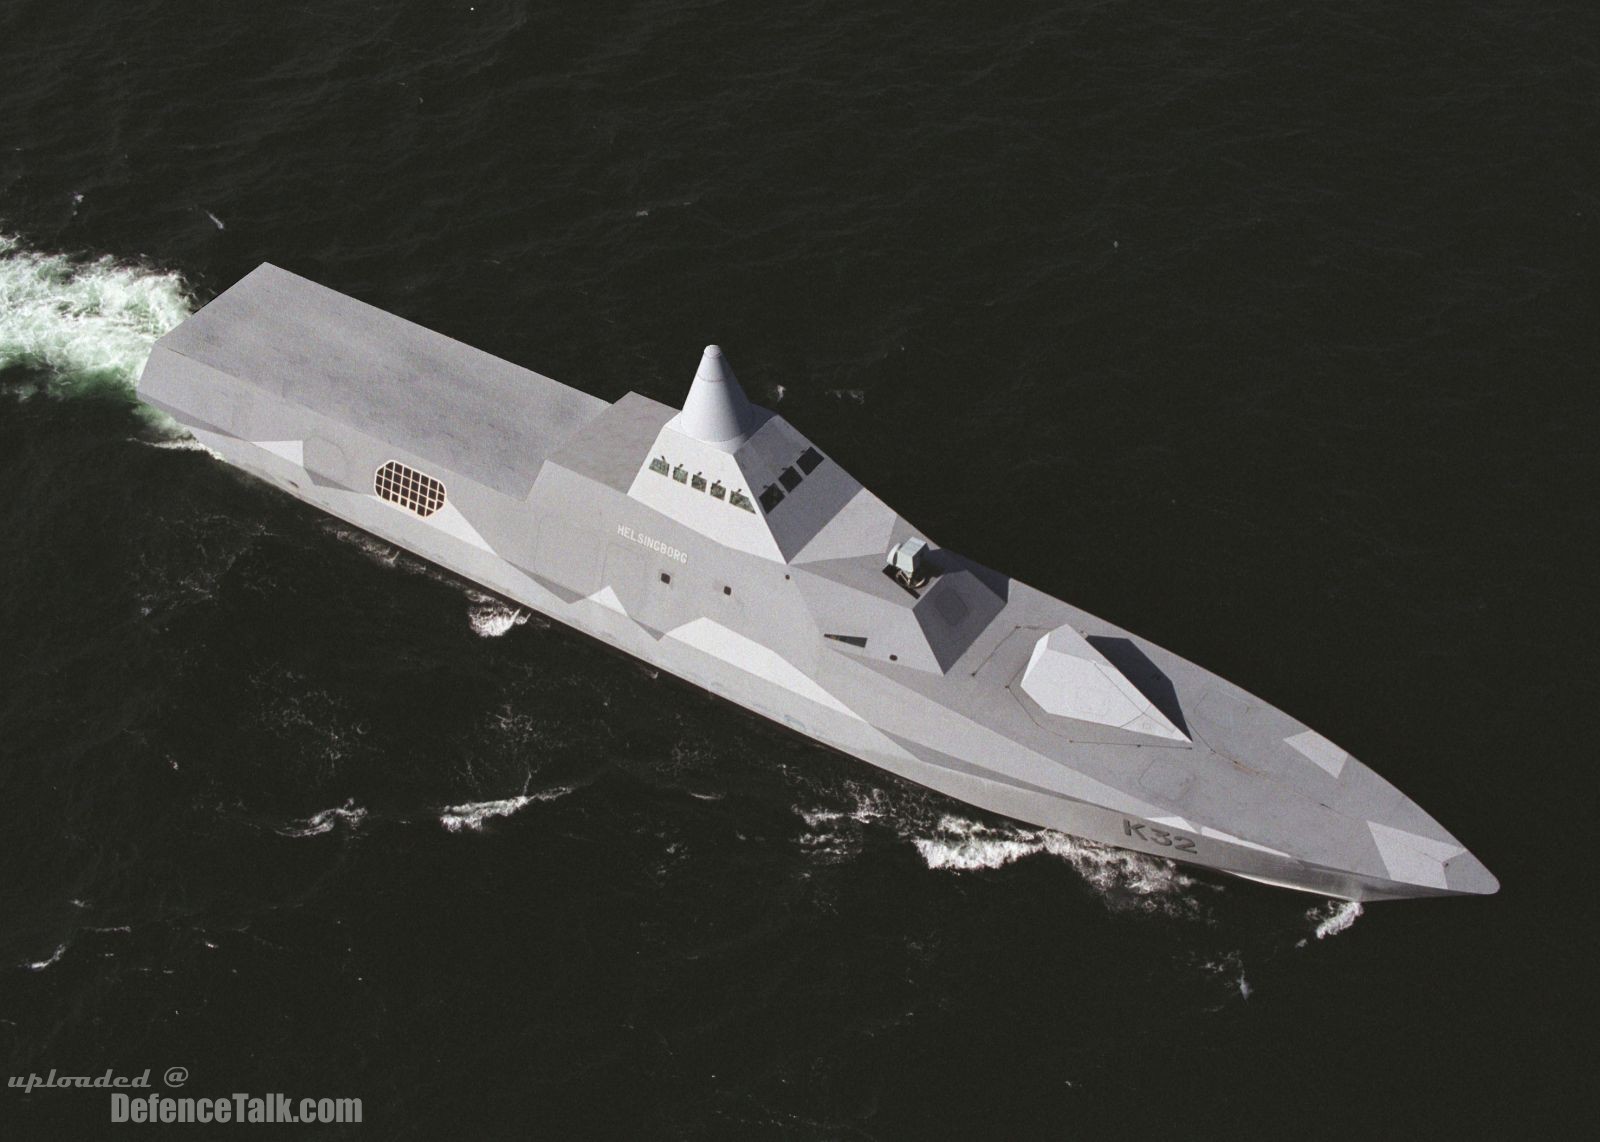 Visby-class corvettes - Swedish Navy